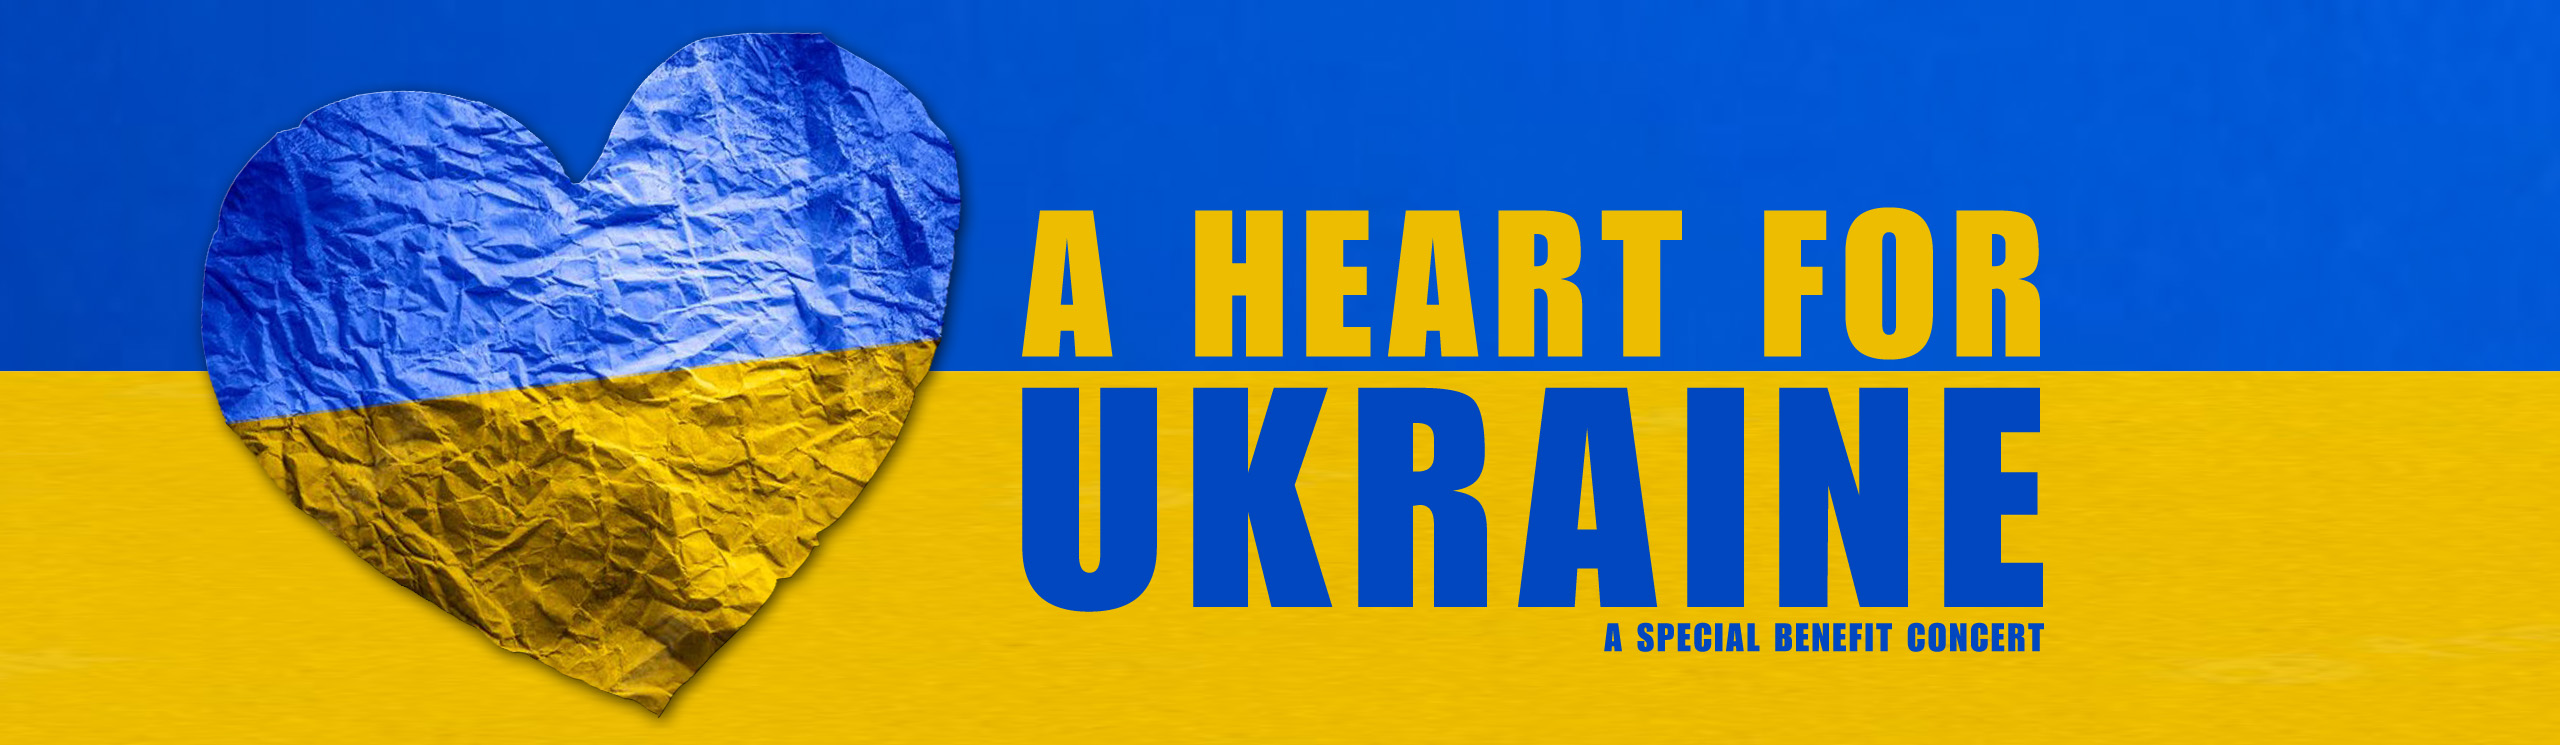 A Heart for Ukraine